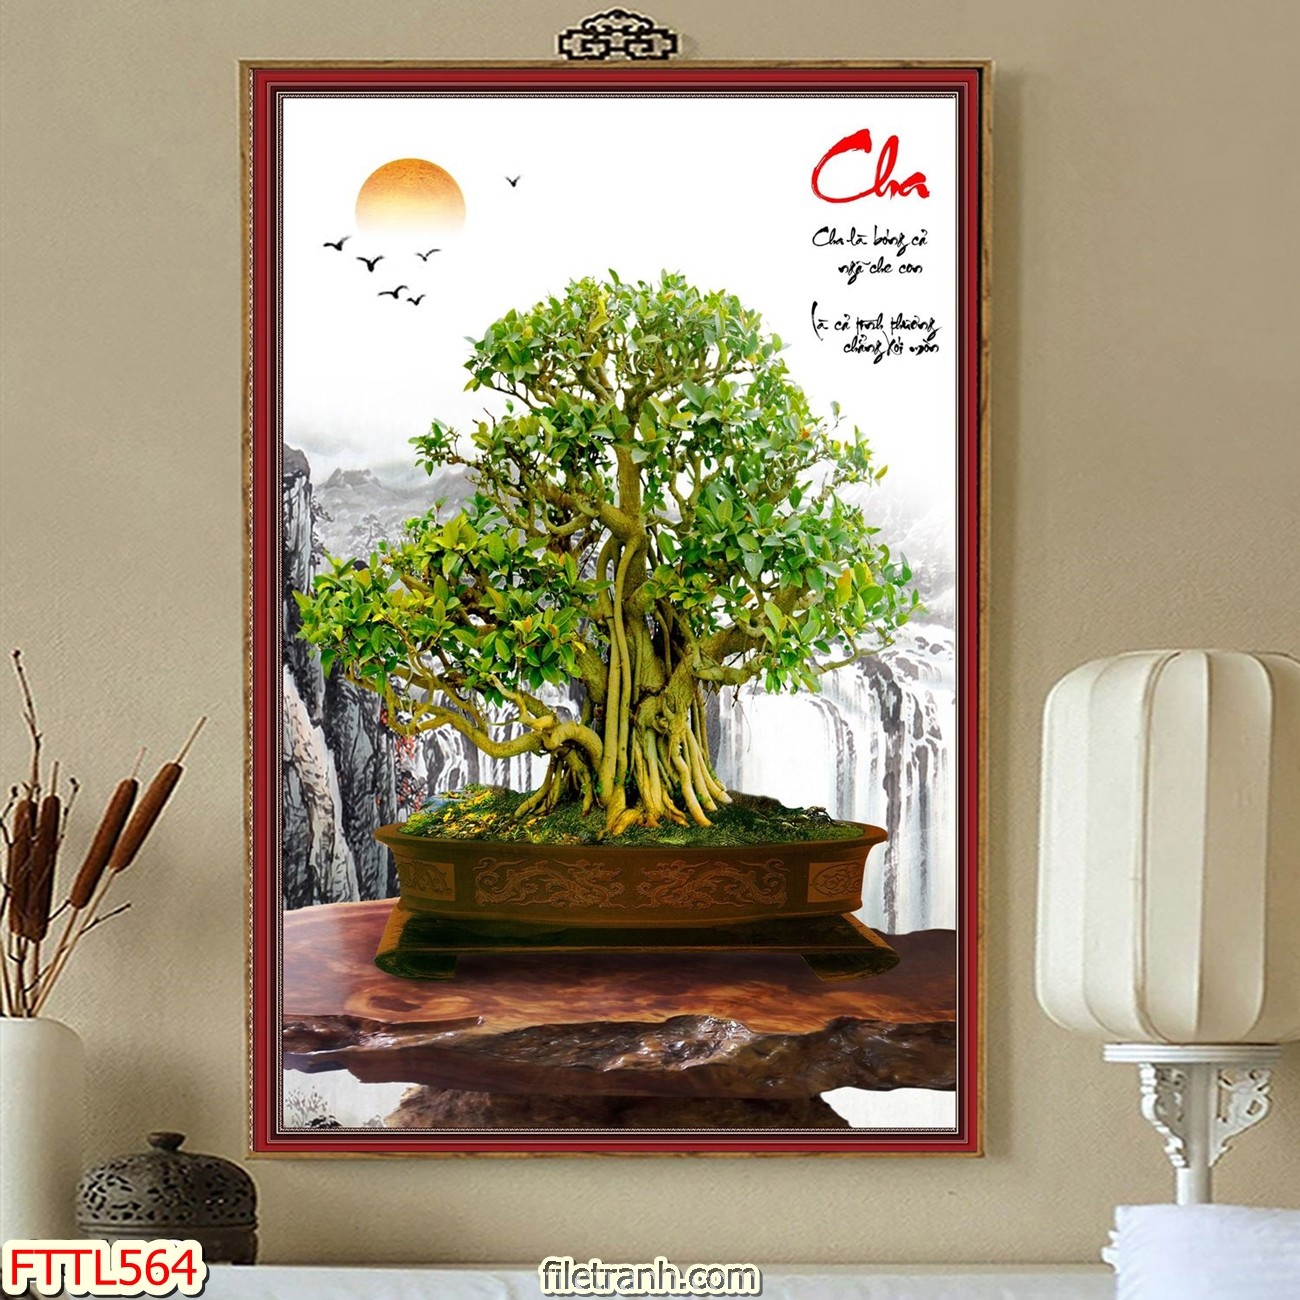 https://filetranh.com/file-tranh-chau-mai-bonsai/file-tranh-chau-mai-bonsai-fttl564.html